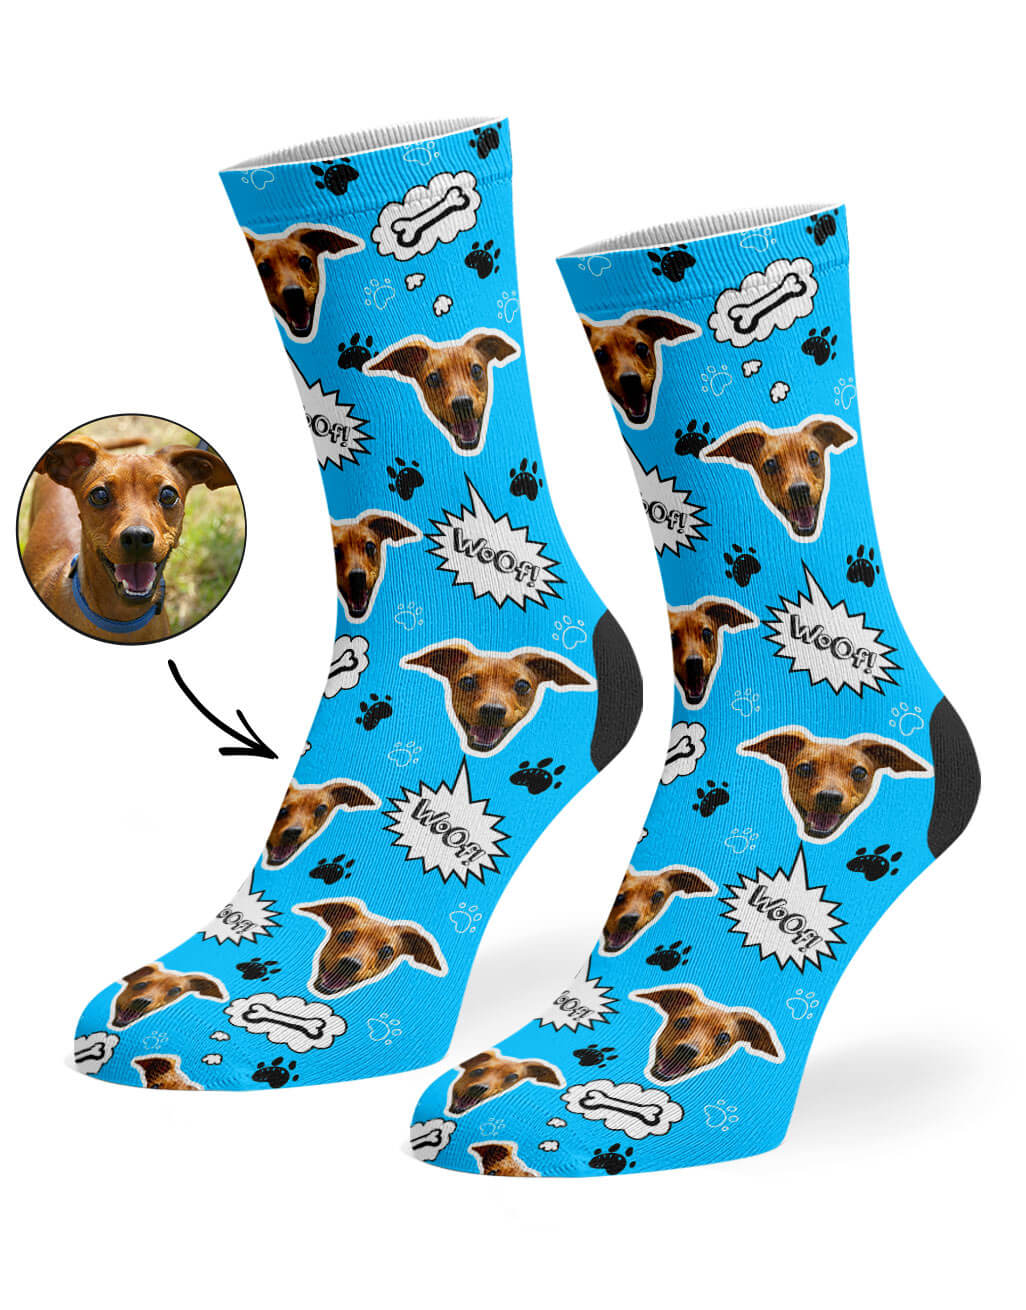 Your Dog on Socks - Personalised Dog Socks – Super Socks